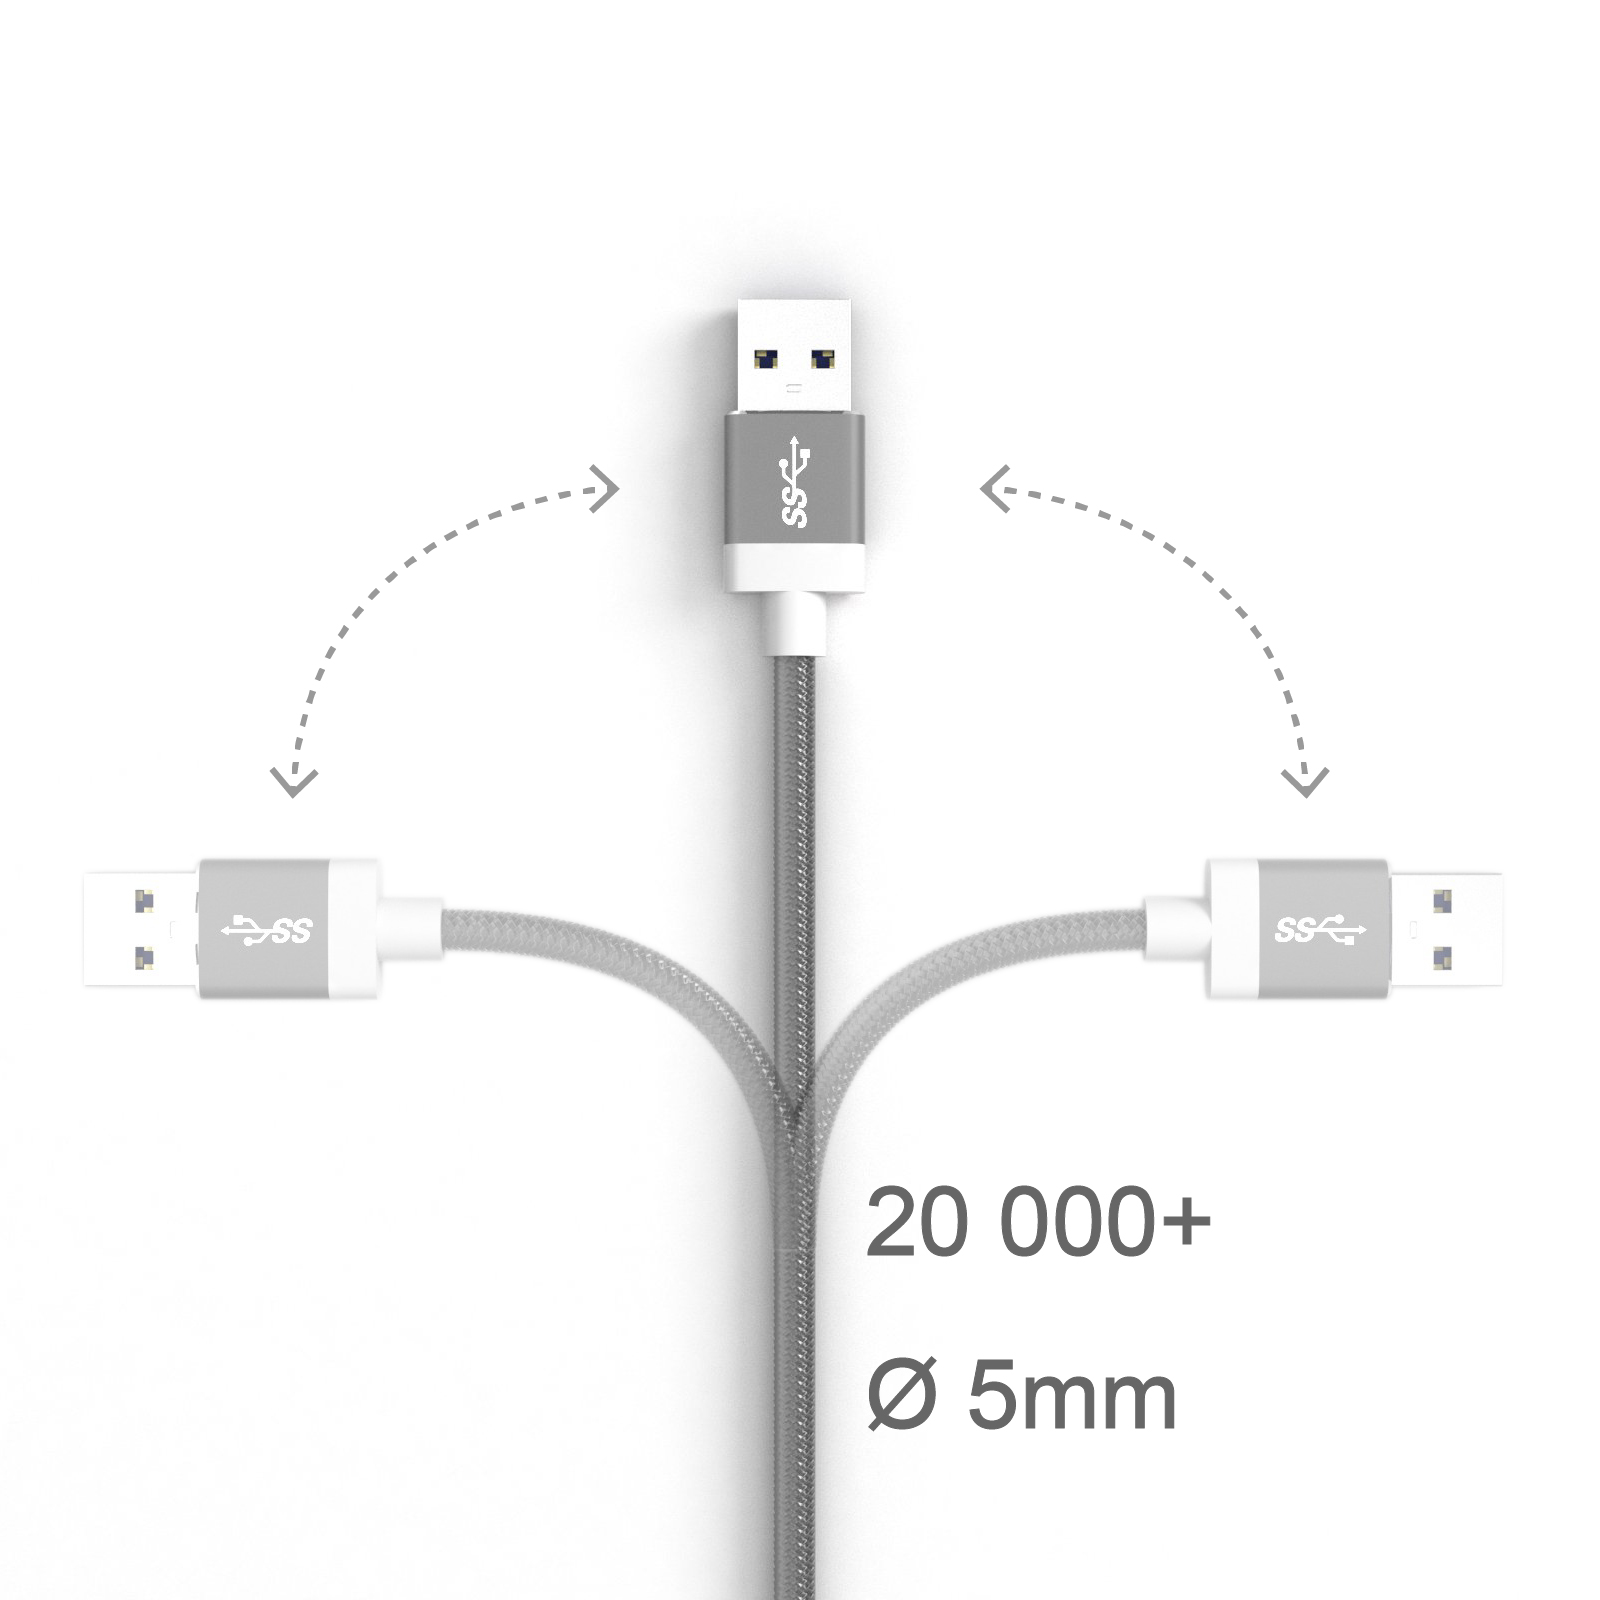 2m Verlängerung 3.0 TUPOWER USB Verlängerungskabel K51 USB